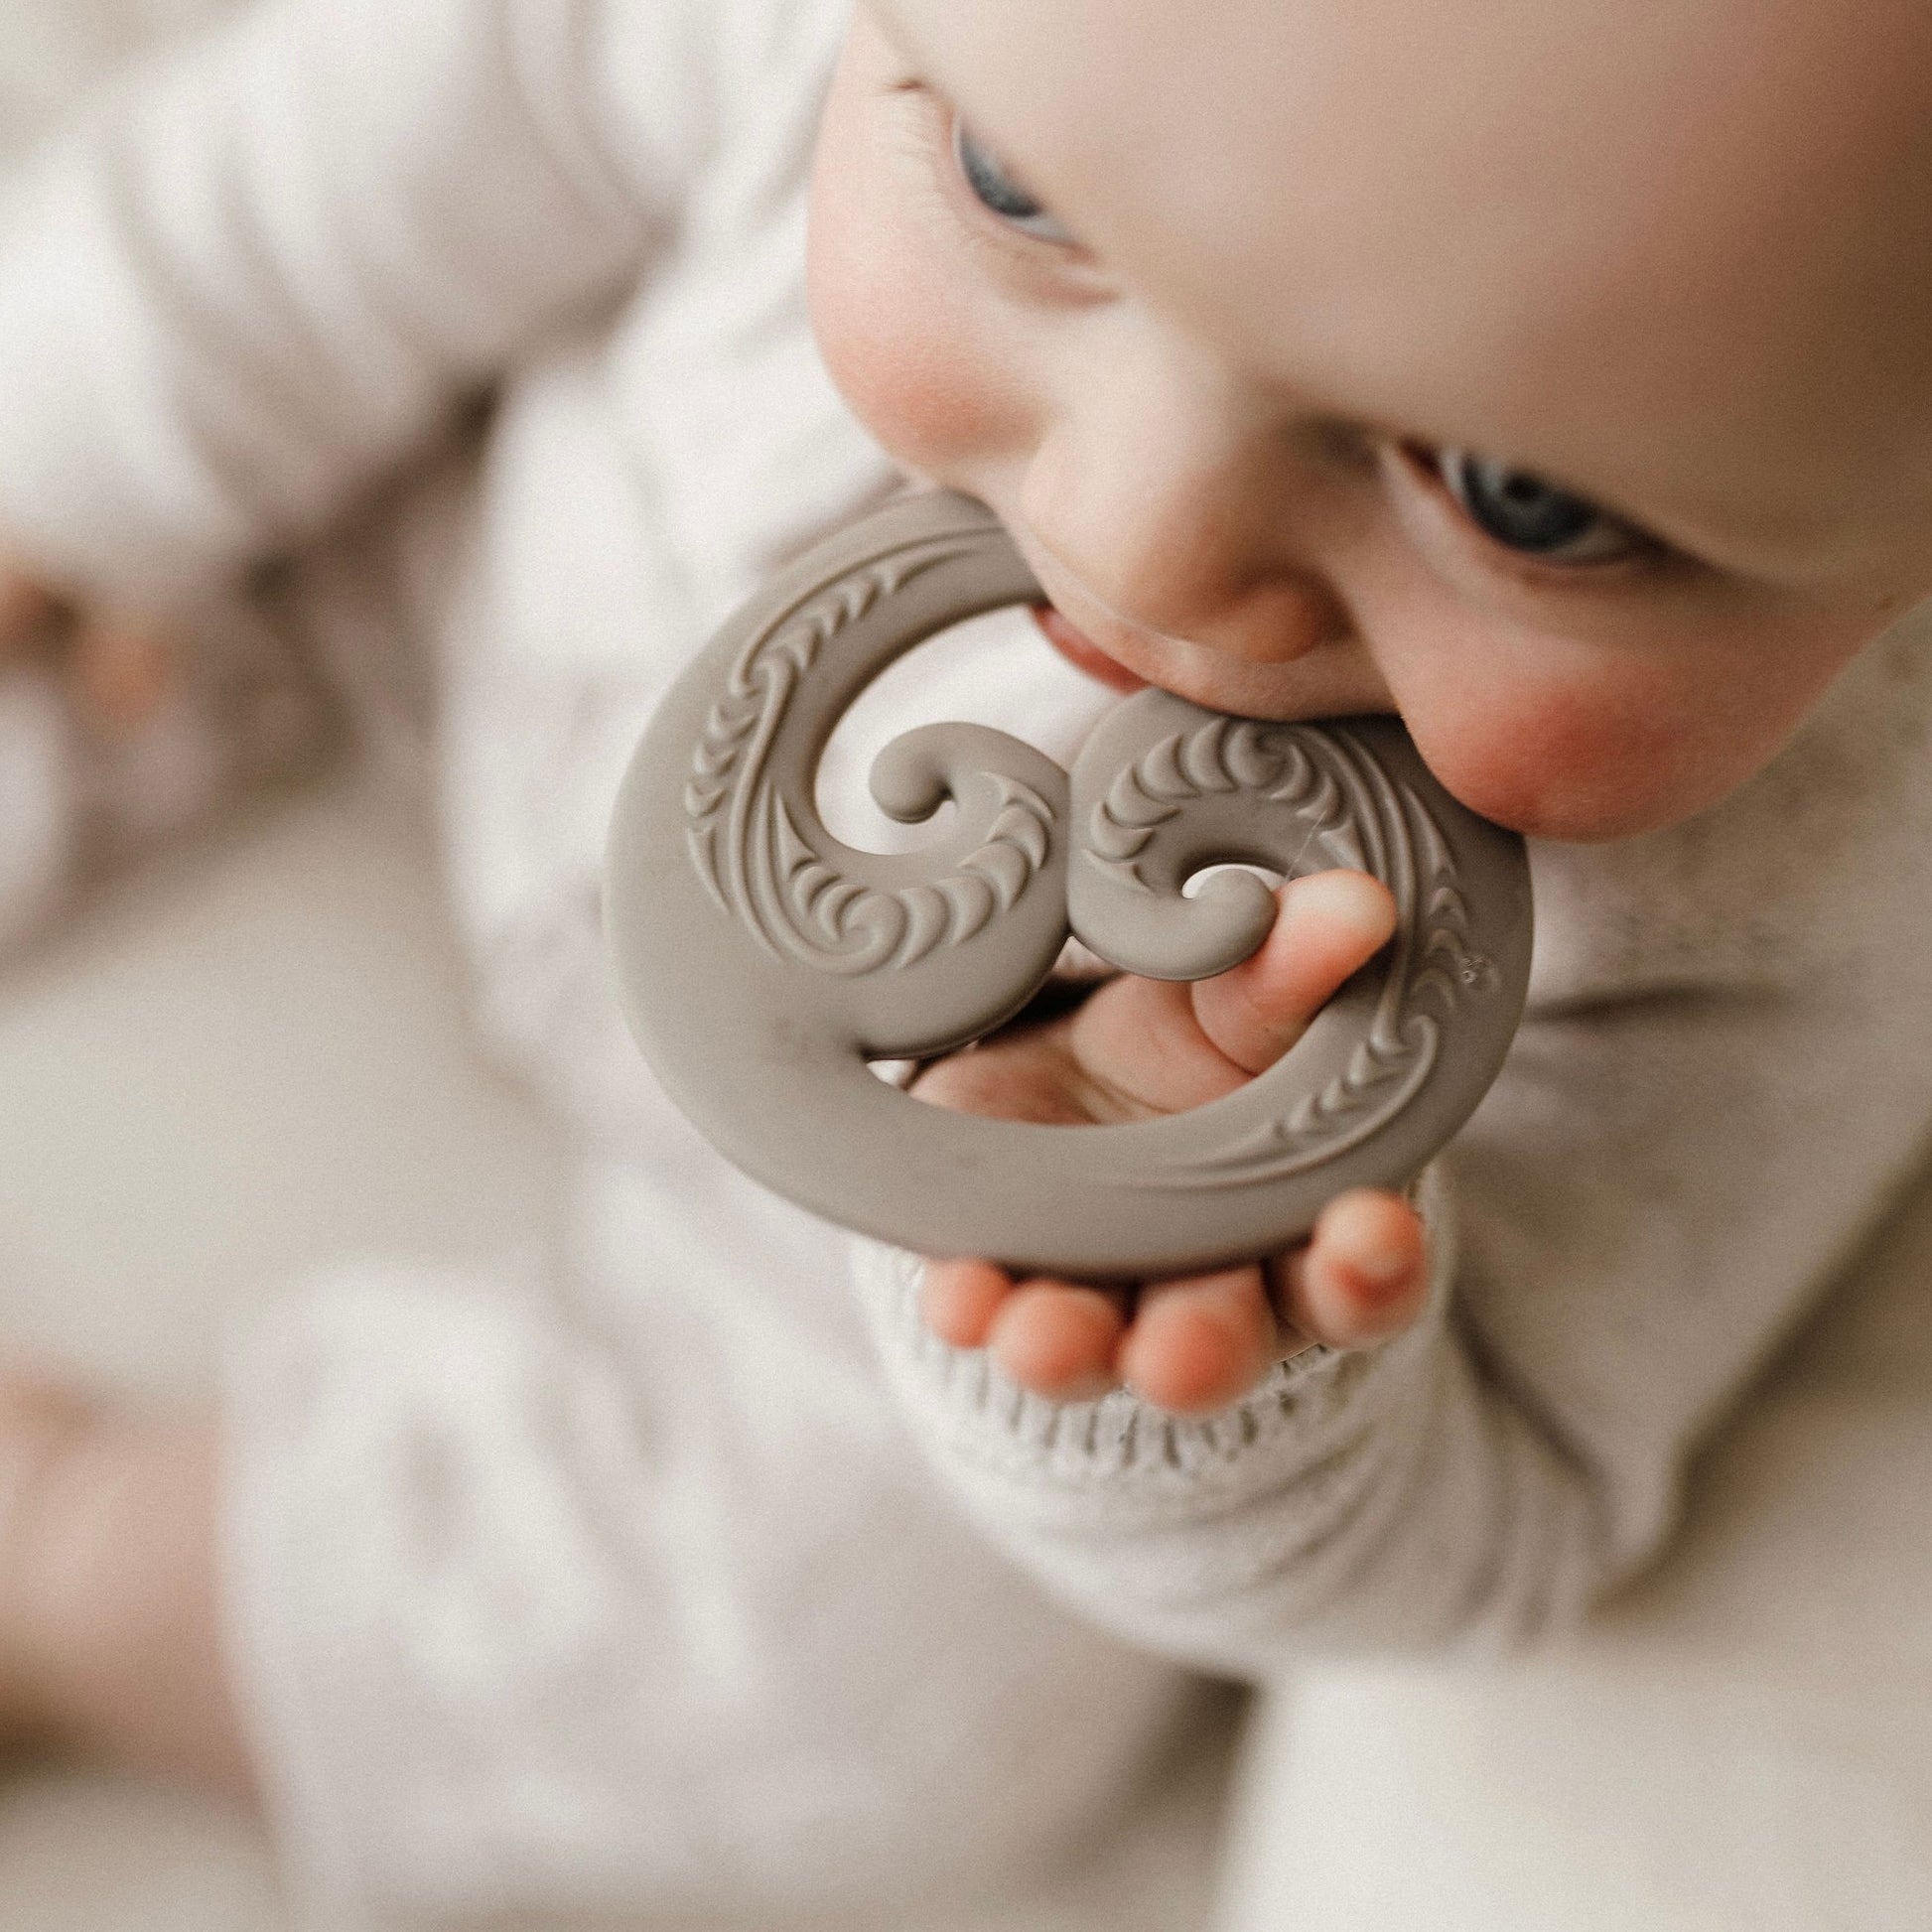 koru, baby toy, koru teether, Teether, Baby teether, Maori baby teether, maori teether, easy to hold, food grade silicone, bpa free, phthalate free, babies, teething, cultural baby products